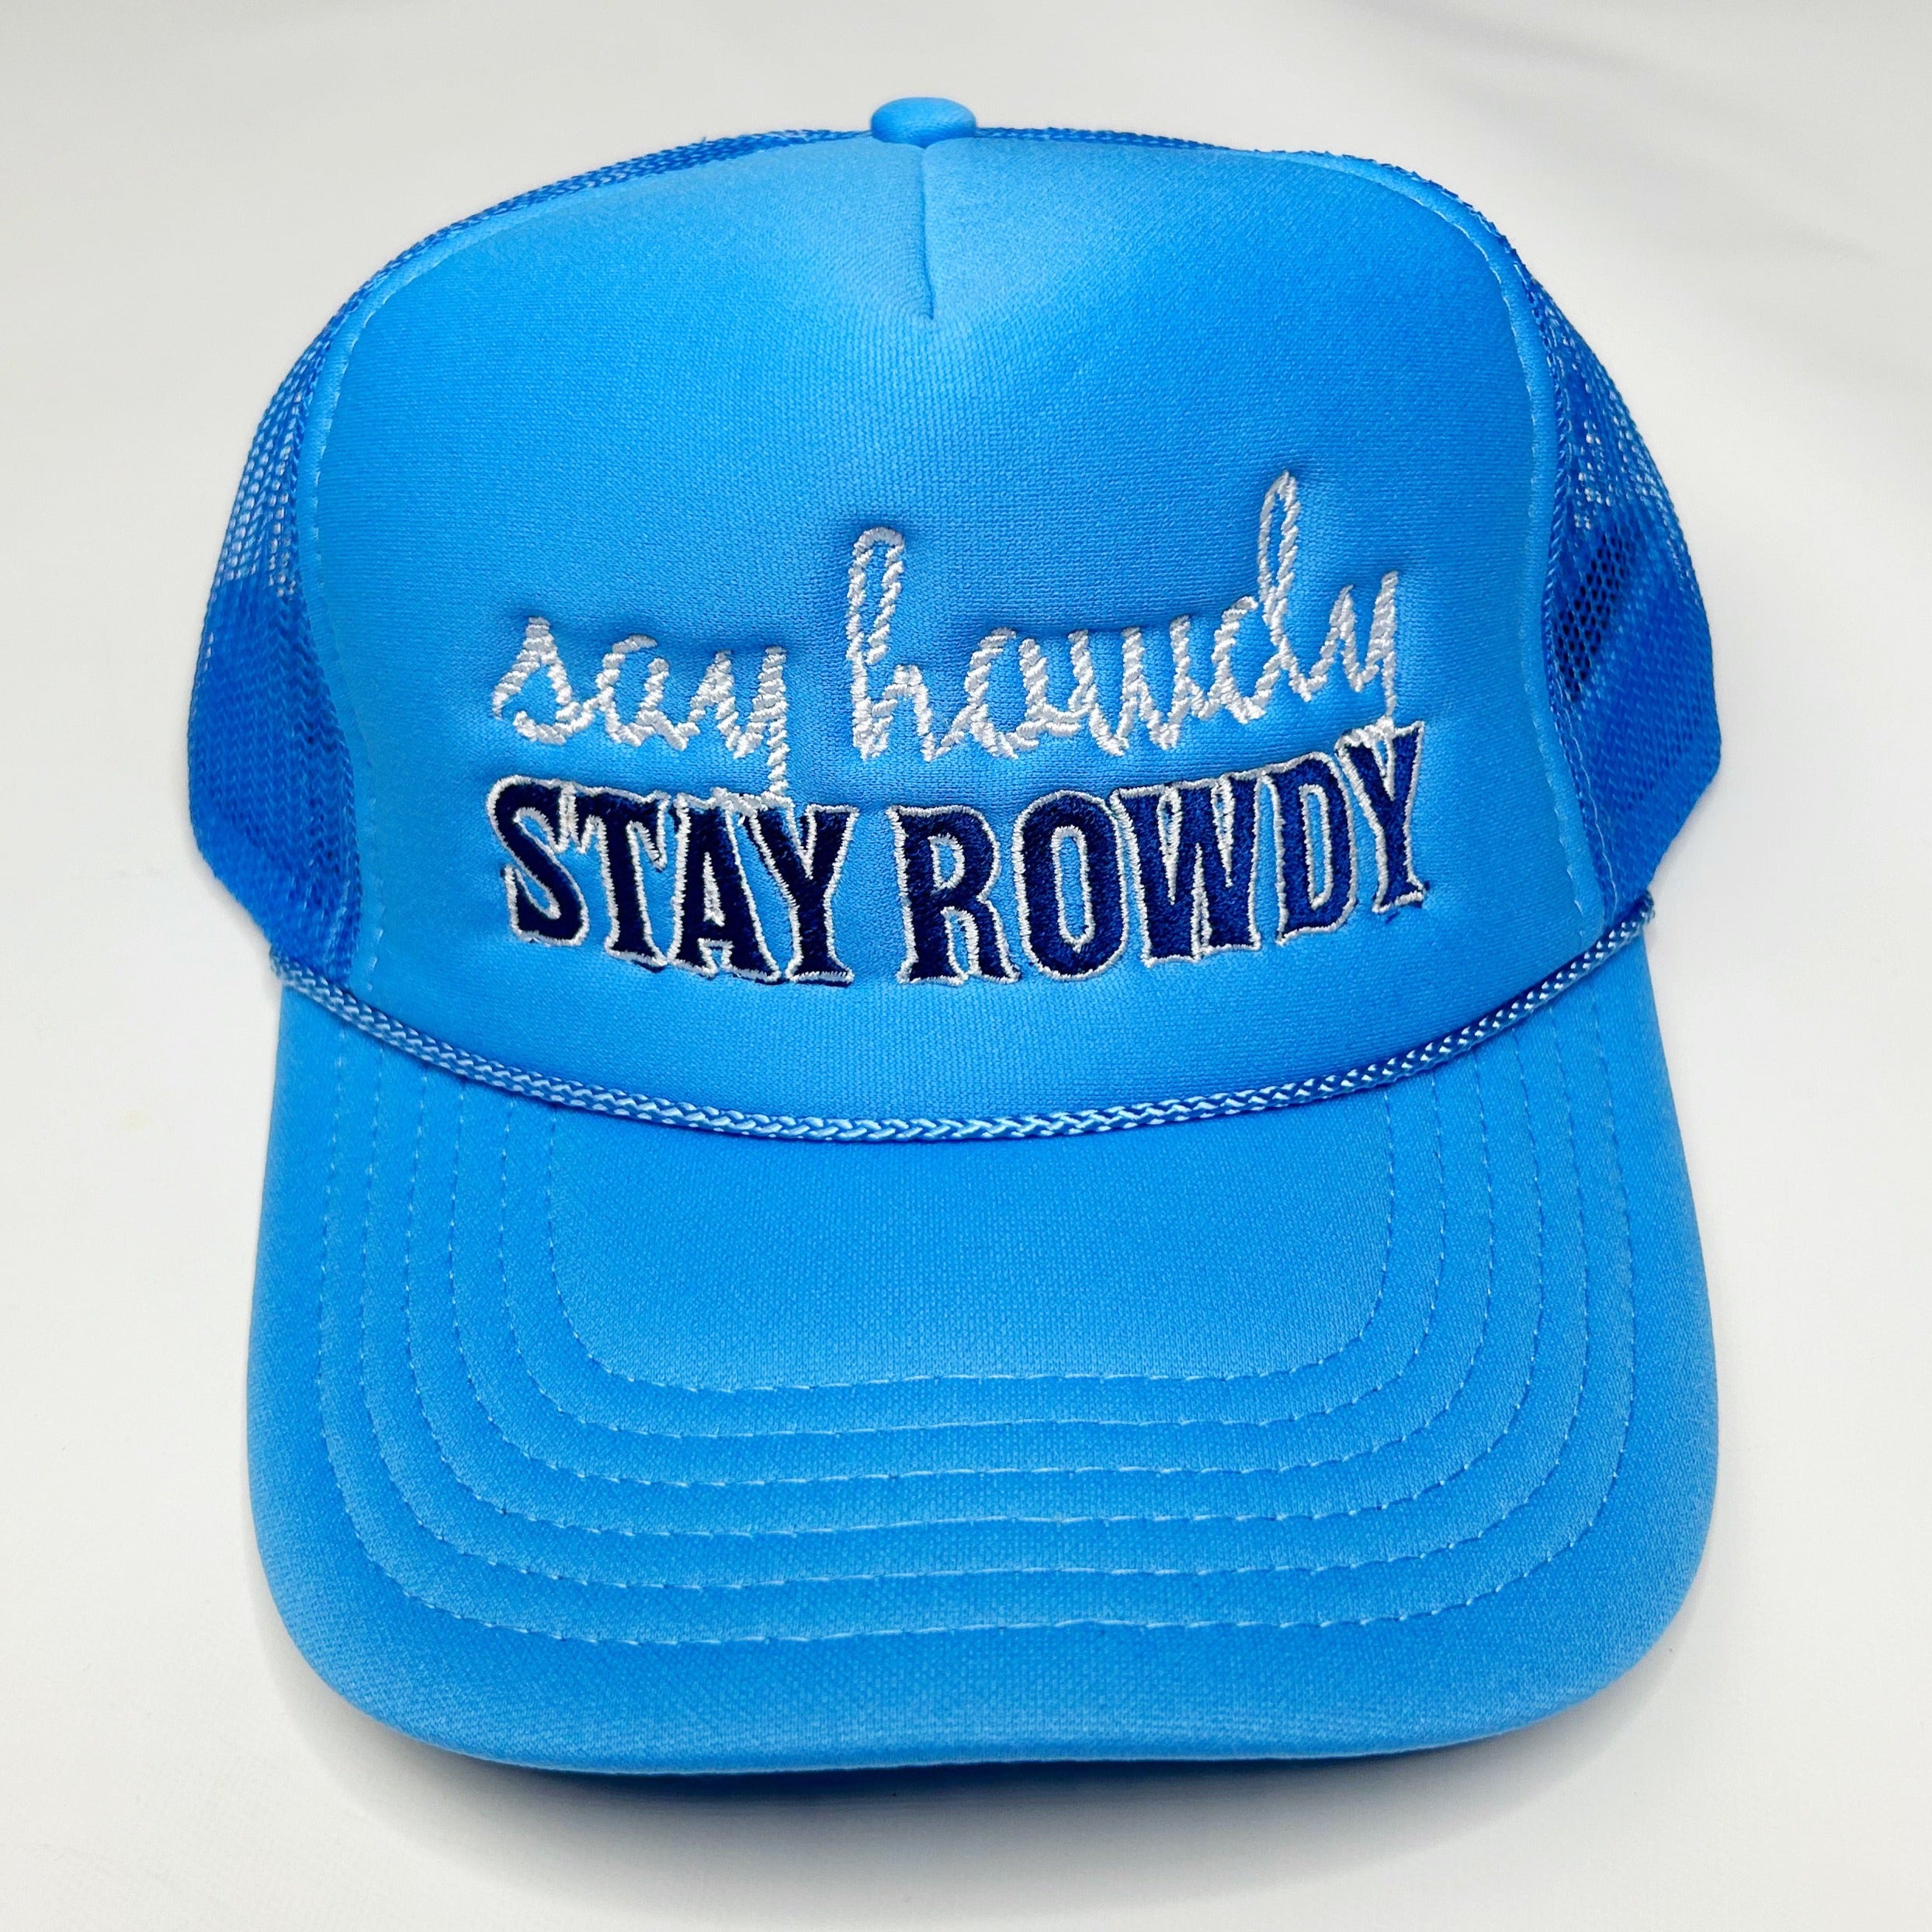 Say Howdy Stay Rowdy Trucker Hat